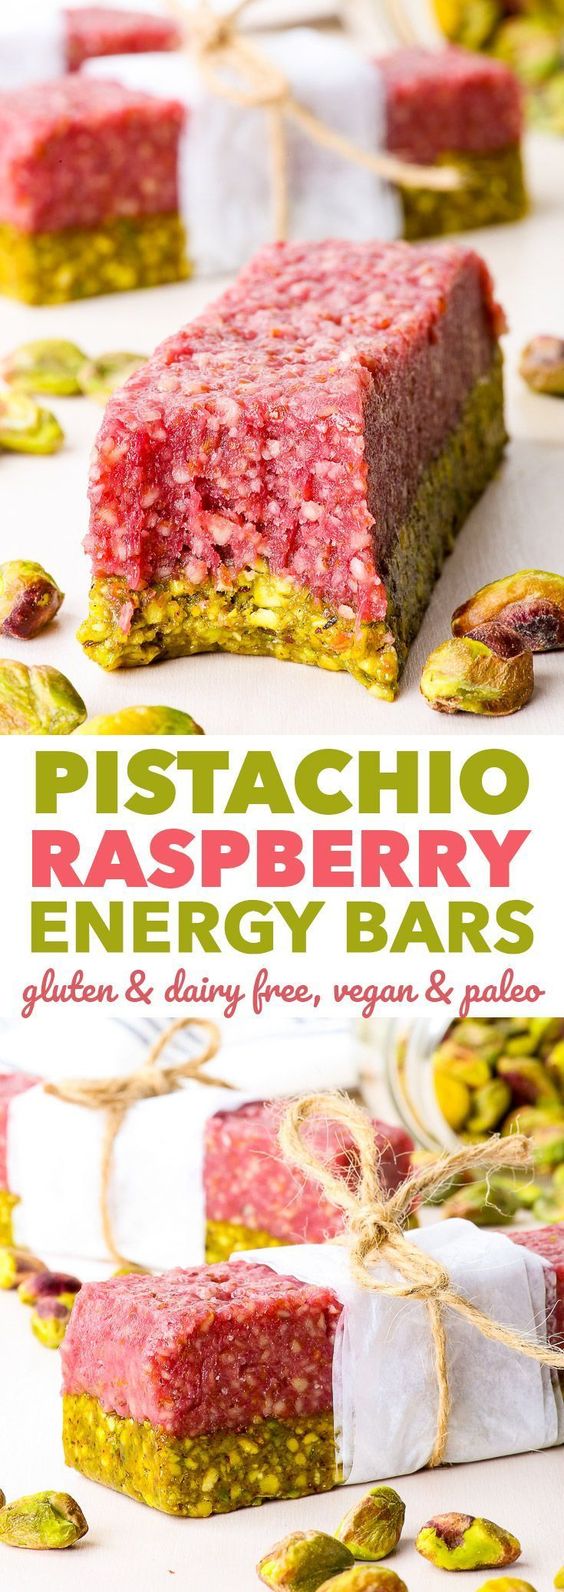 Pistachio Raspberry Energy Bars (Vegan + Paleo) #pistachio #raspberry #energy #bars #vegan #paleo #healthyrecipes #healthyfood #healthysnacks